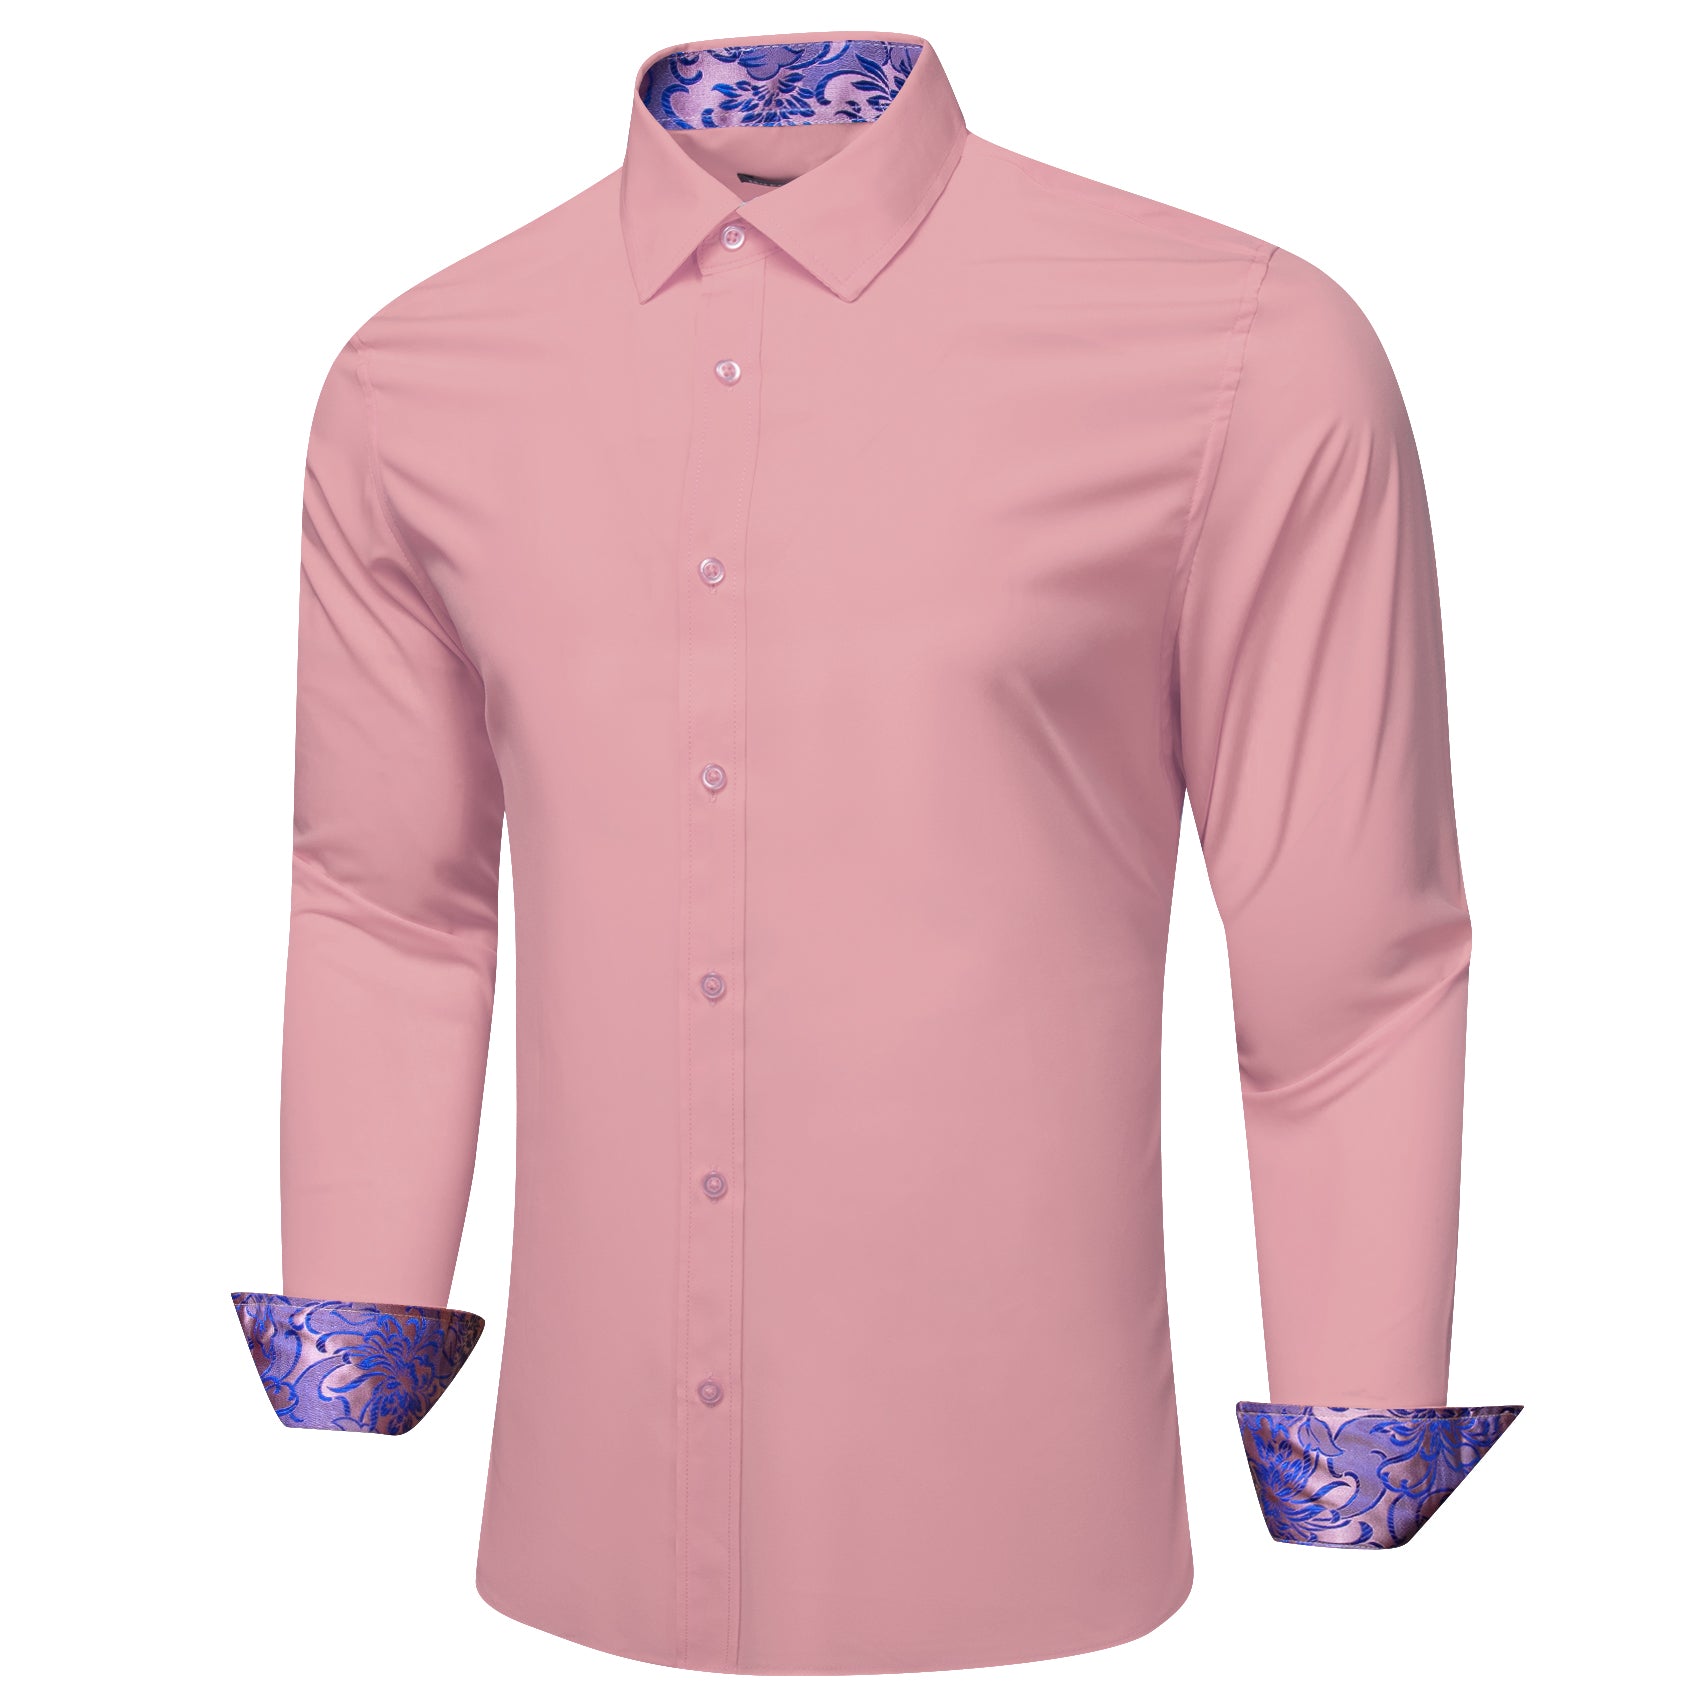 Barry.wang Formal Pink Purple Splicing Men's Business Shirt